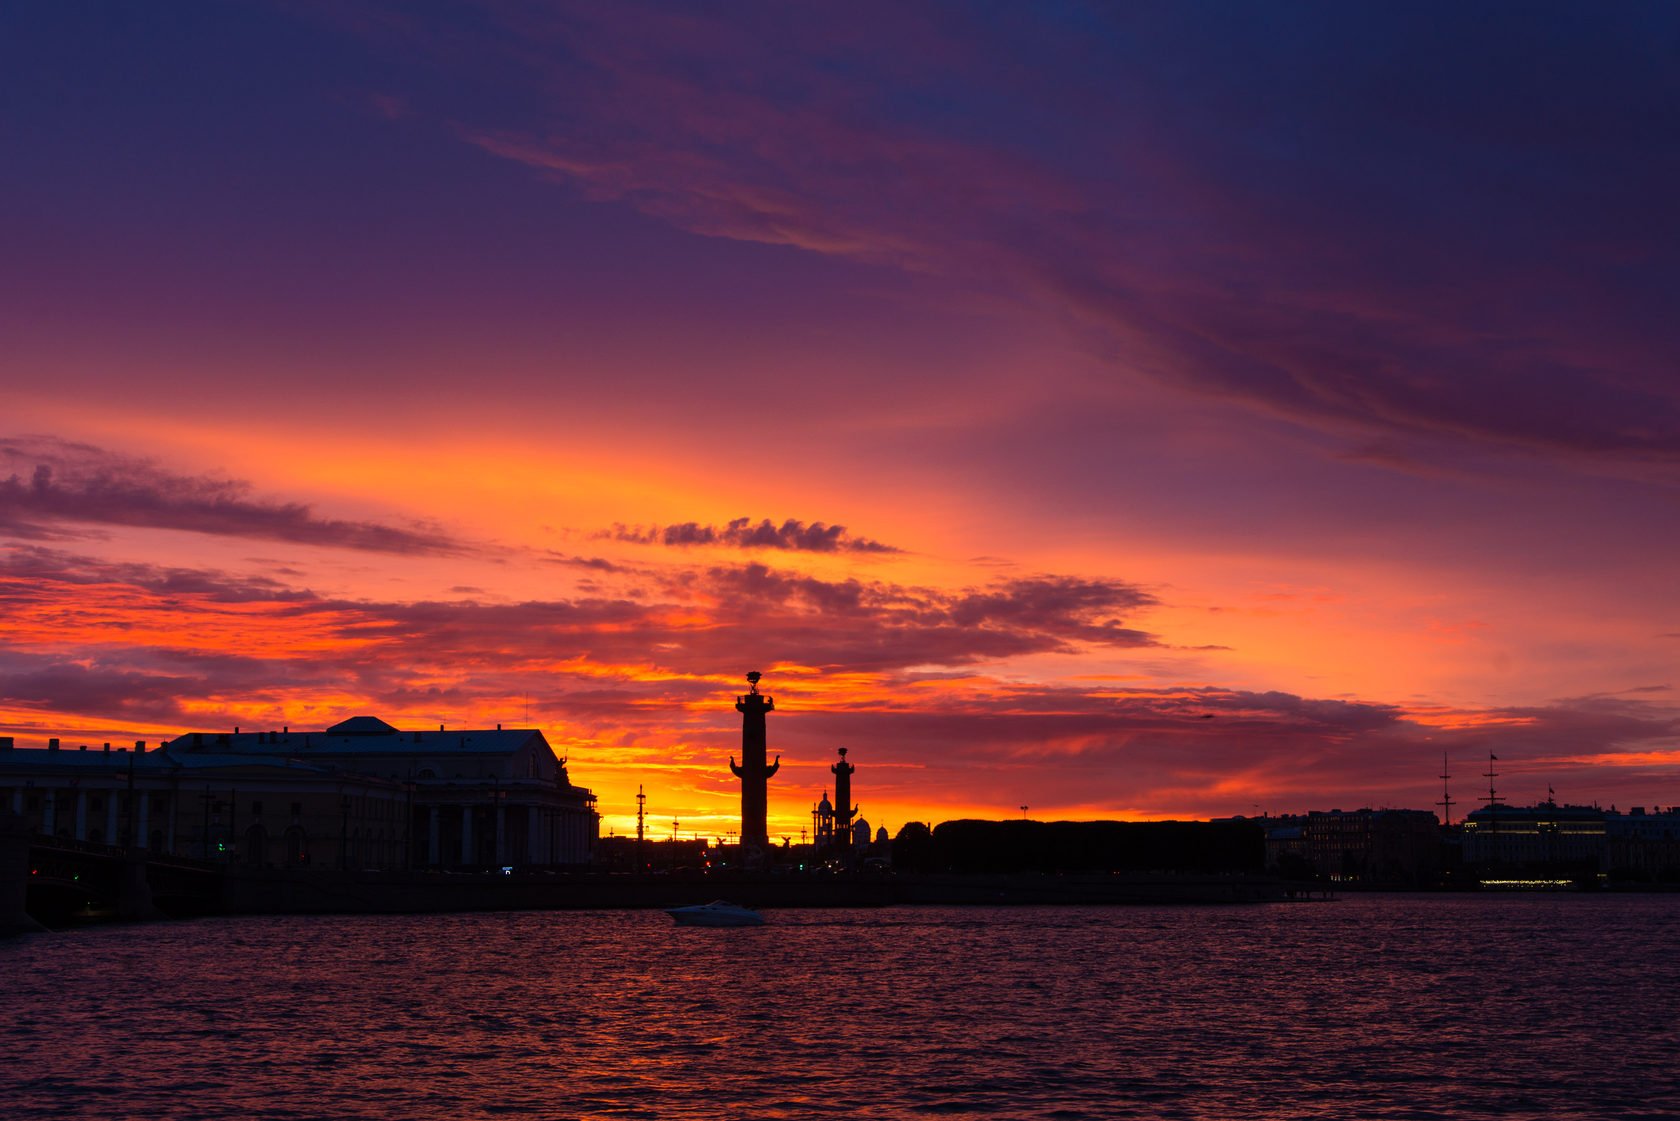 Закат солнца в петербурге. Кронштадт Санкт-Петербург. Закат над Питером. Набережная Санкт-Петербурга.